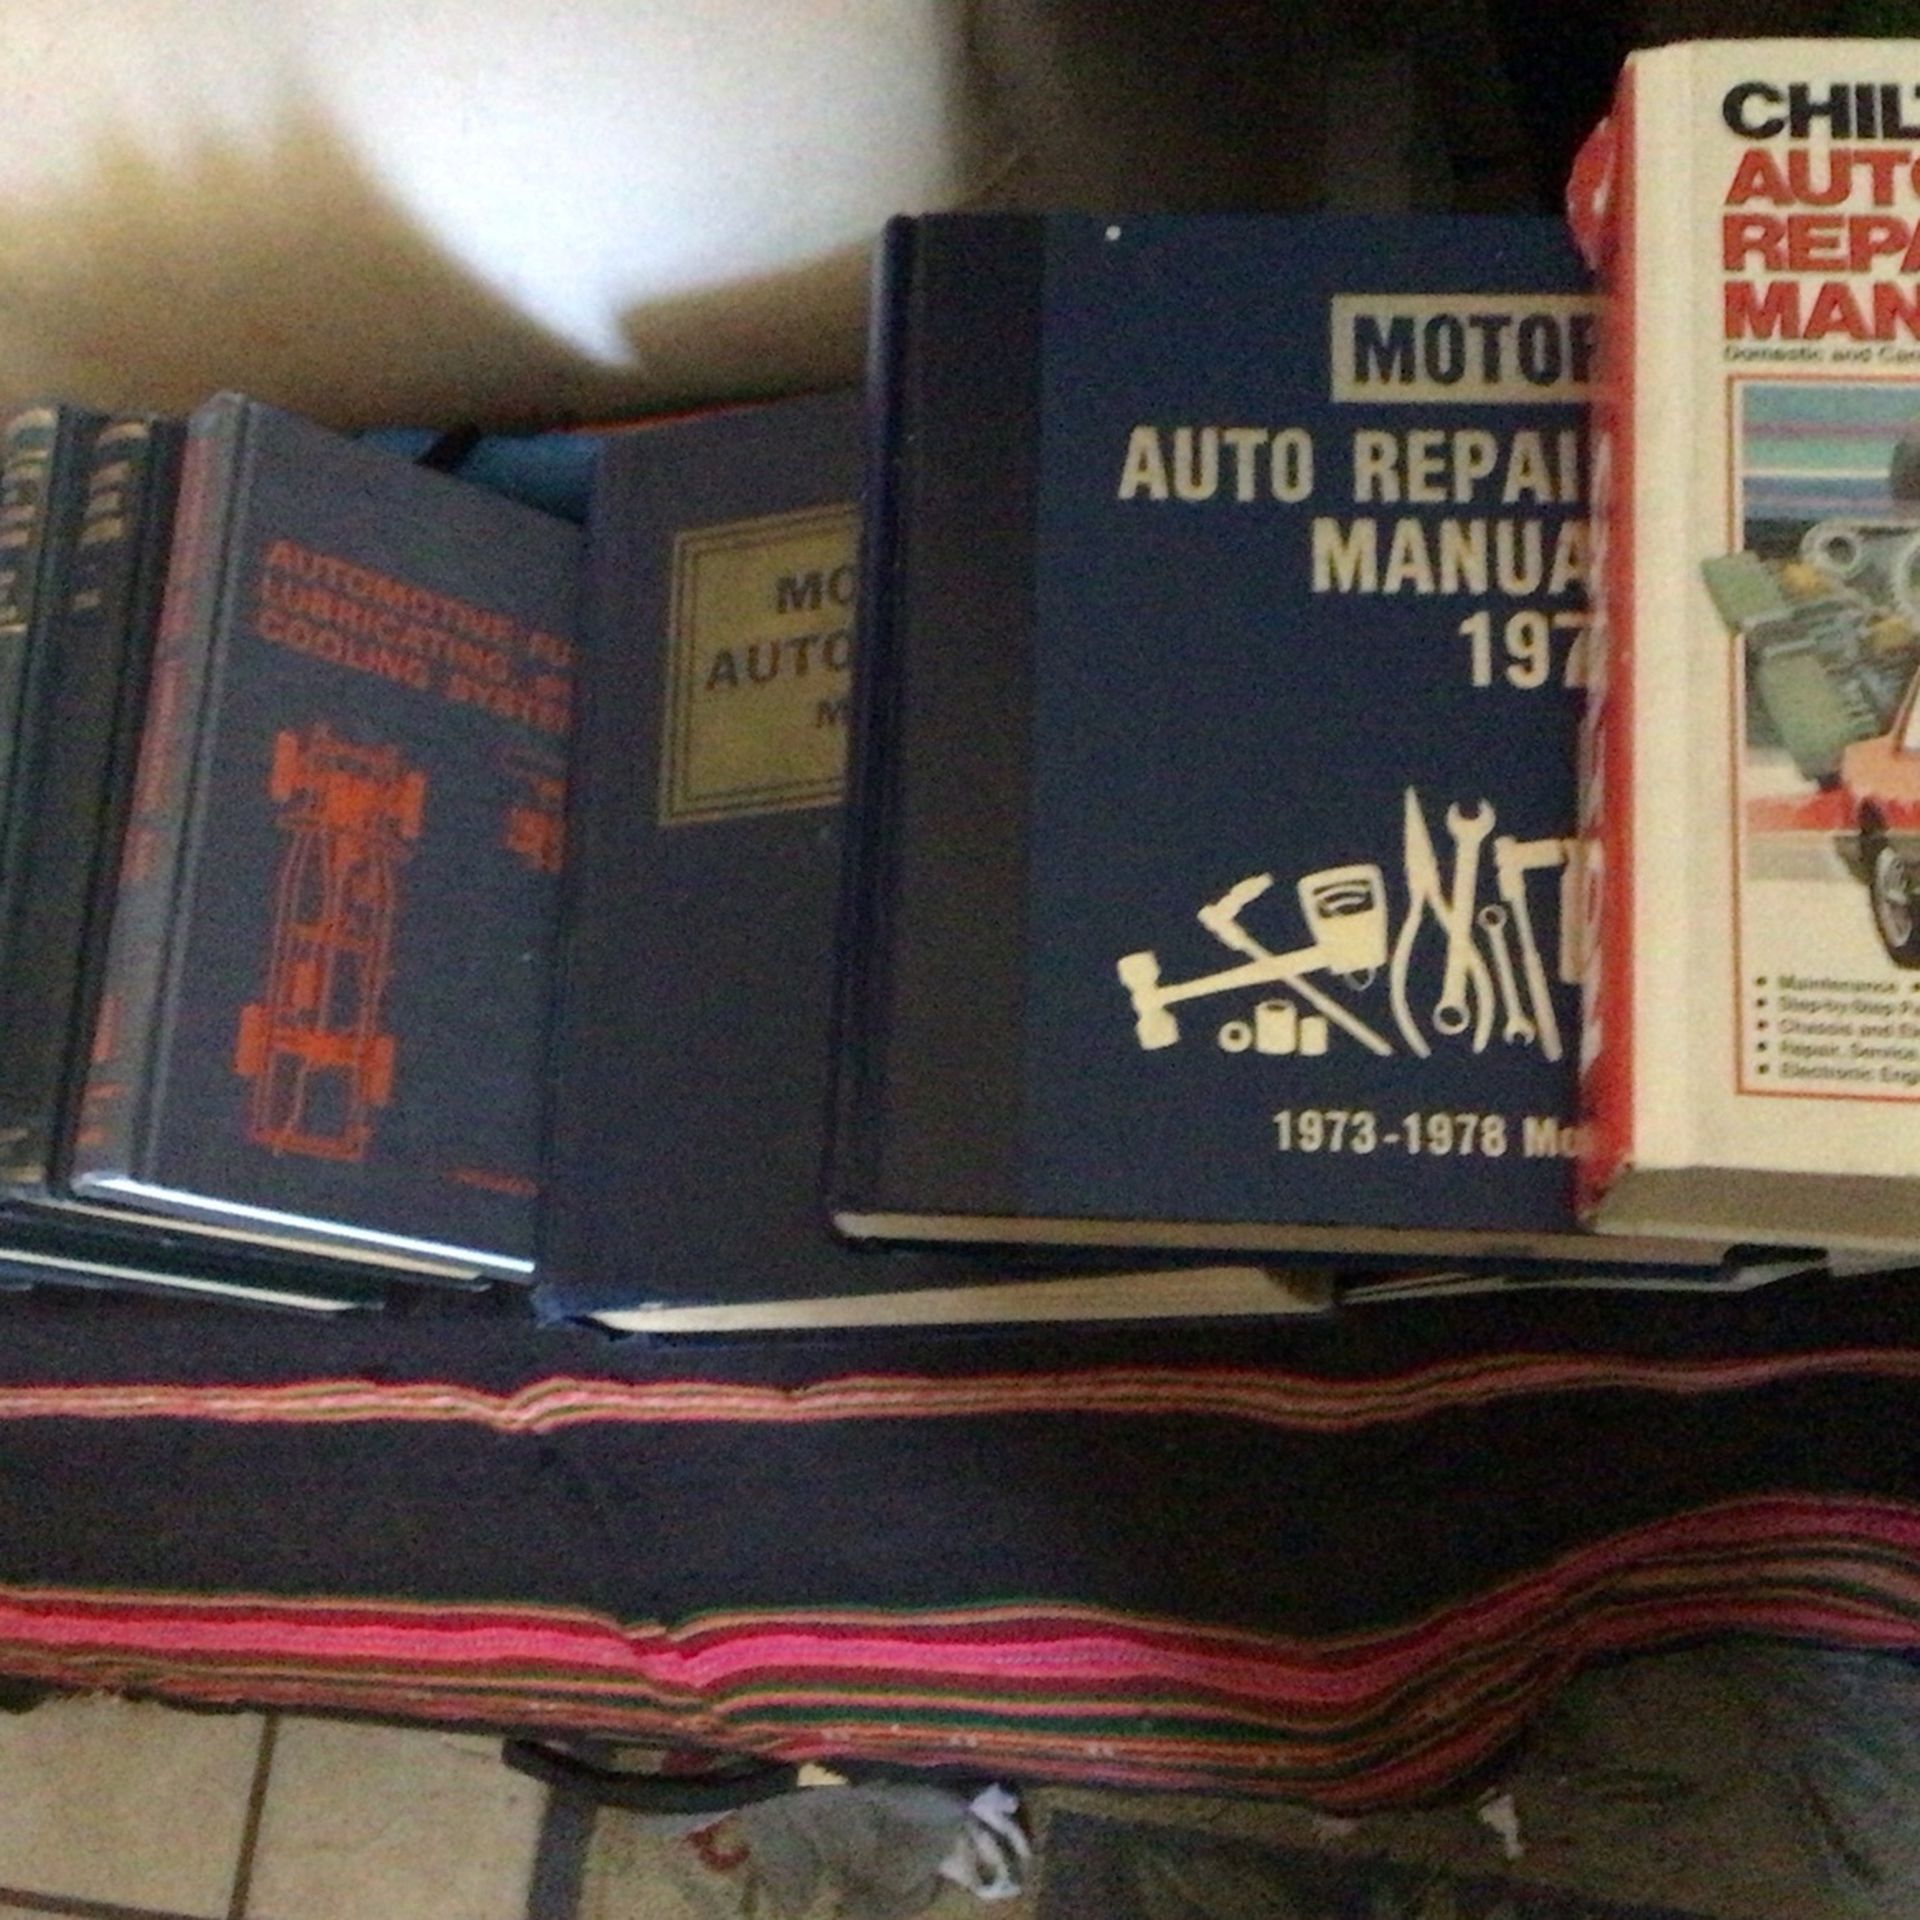 Various Chiltons Manuals